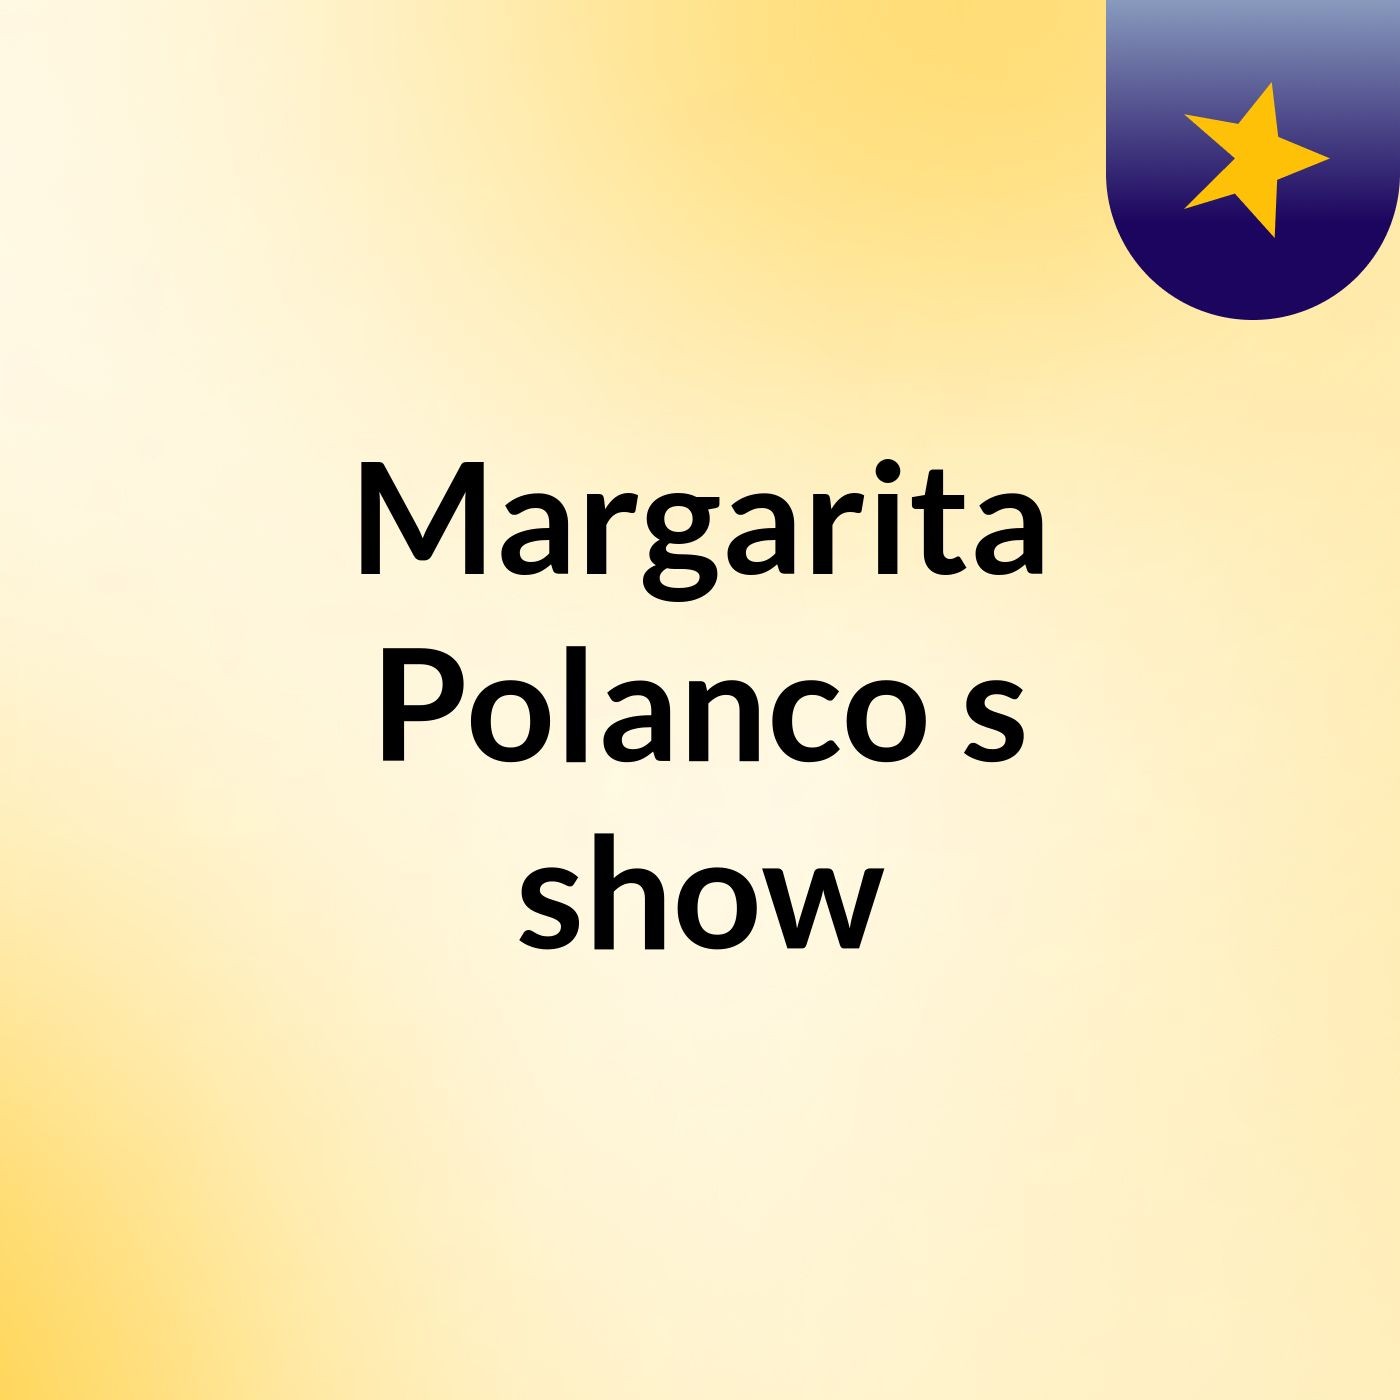 Margarita Polanco's show